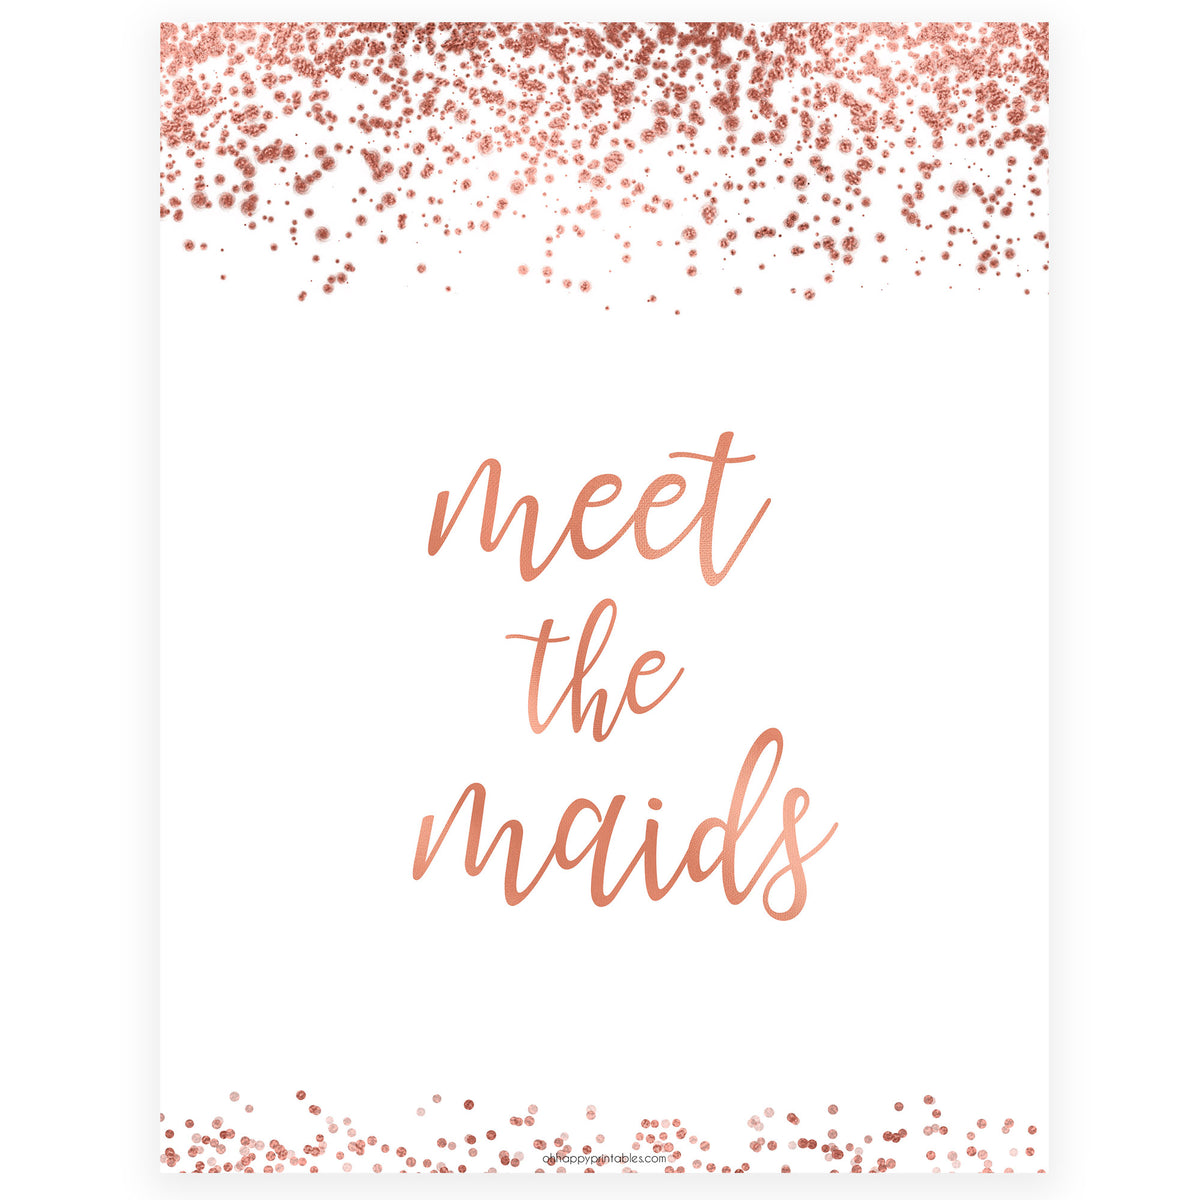 Meet the Maids Sign - Rose Gold Foil